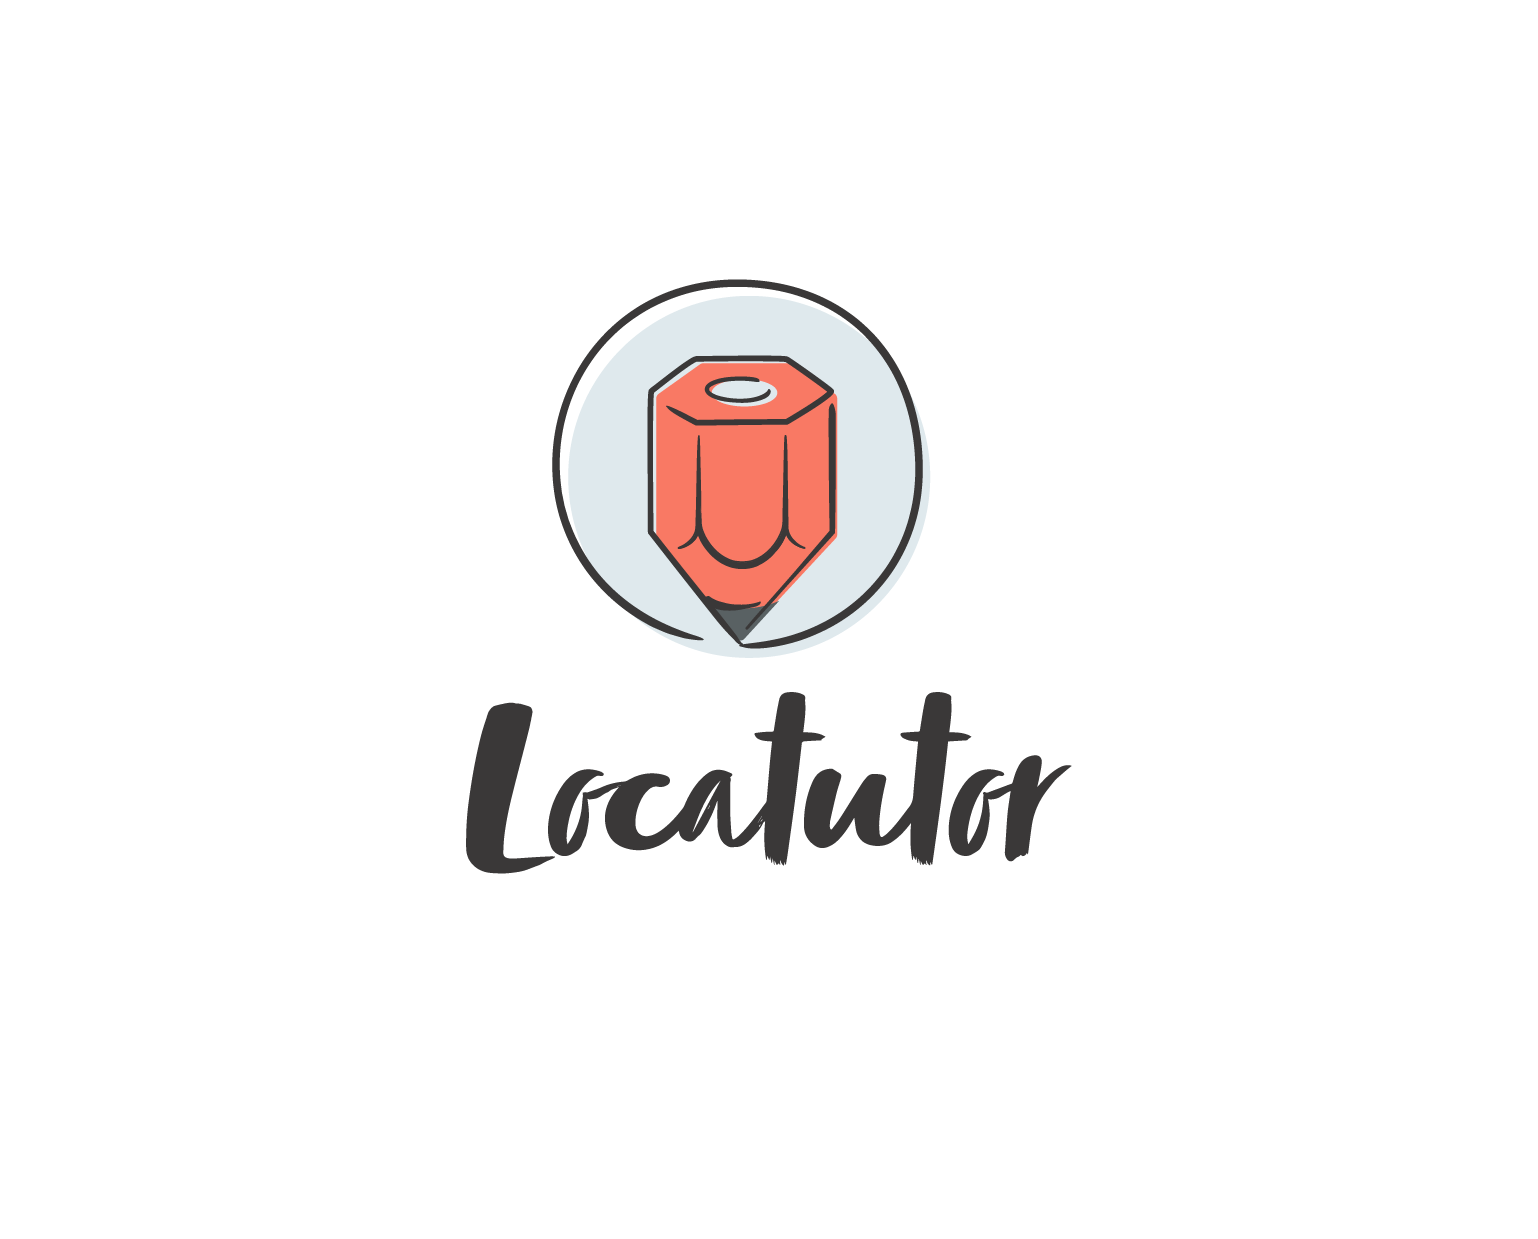 Locatutor - Business branding, logo development and visual identity for an tutor-student matching company.